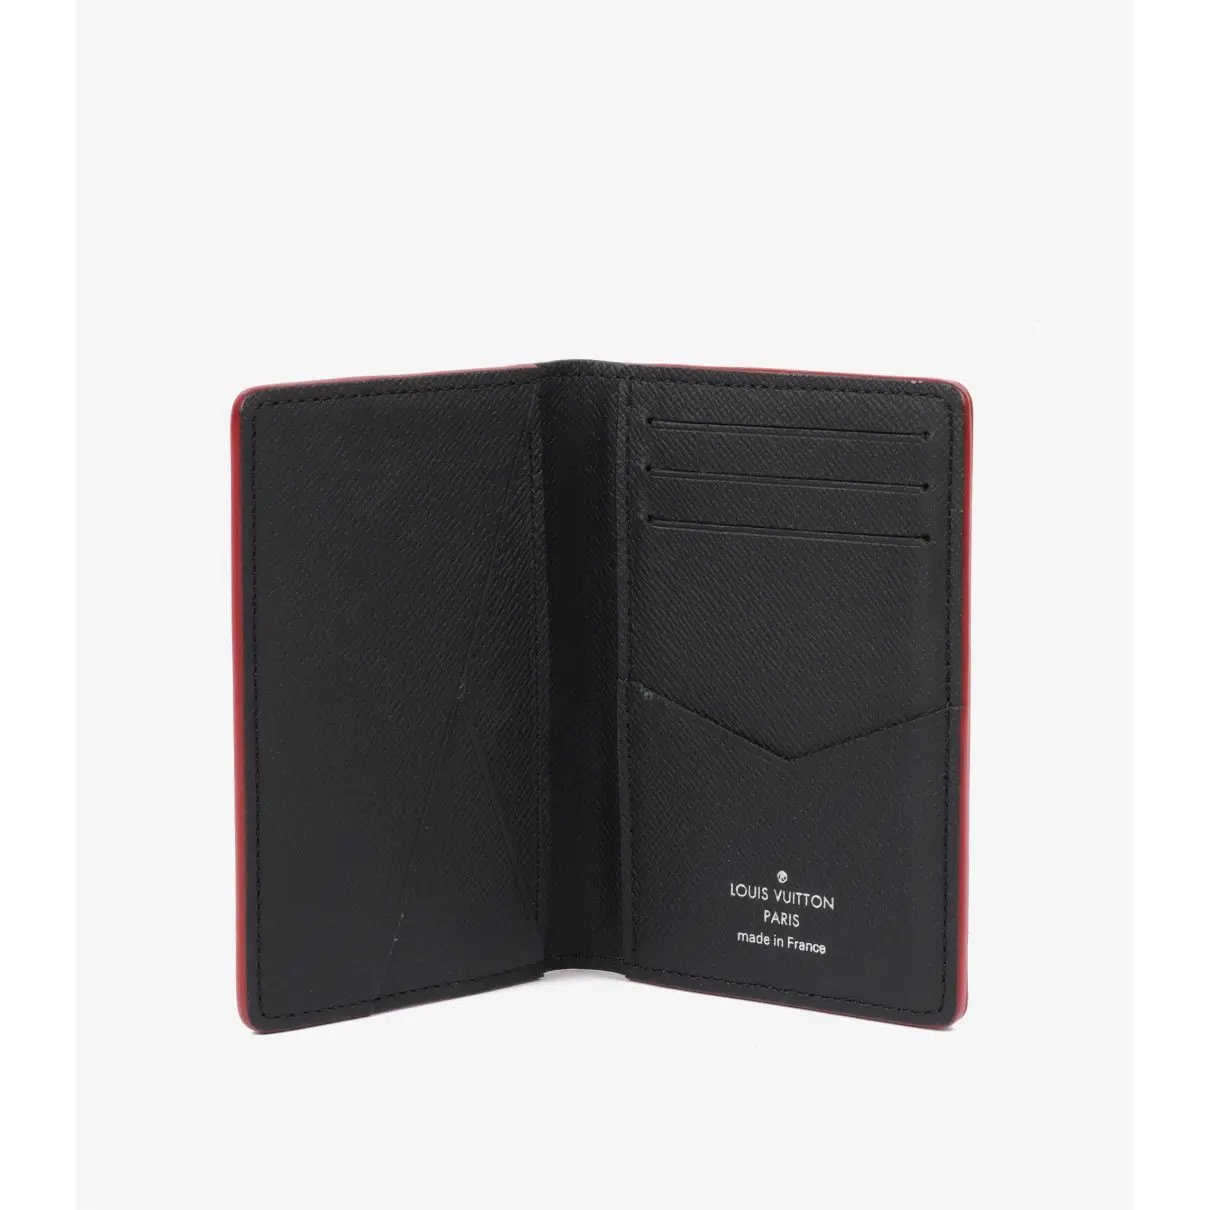 Cloth card wallet Louis Vuitton - Vintage